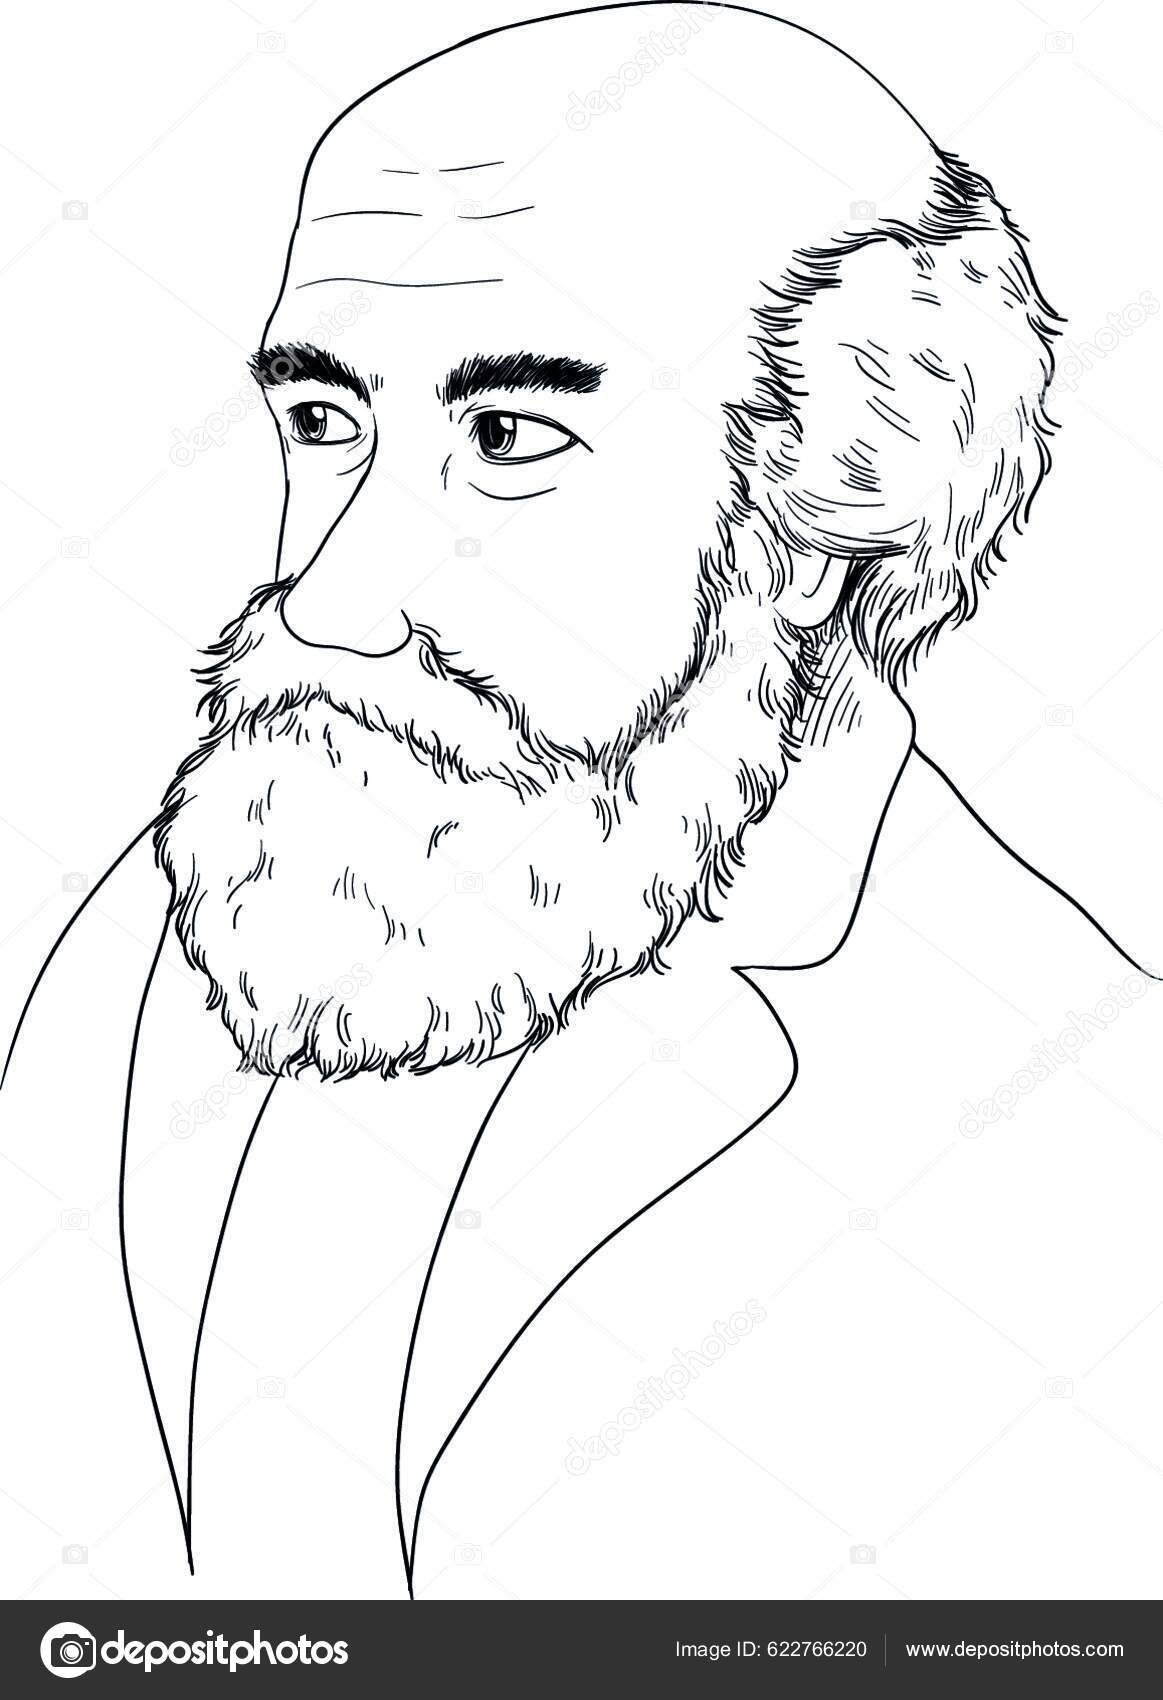 Darwin dibujo